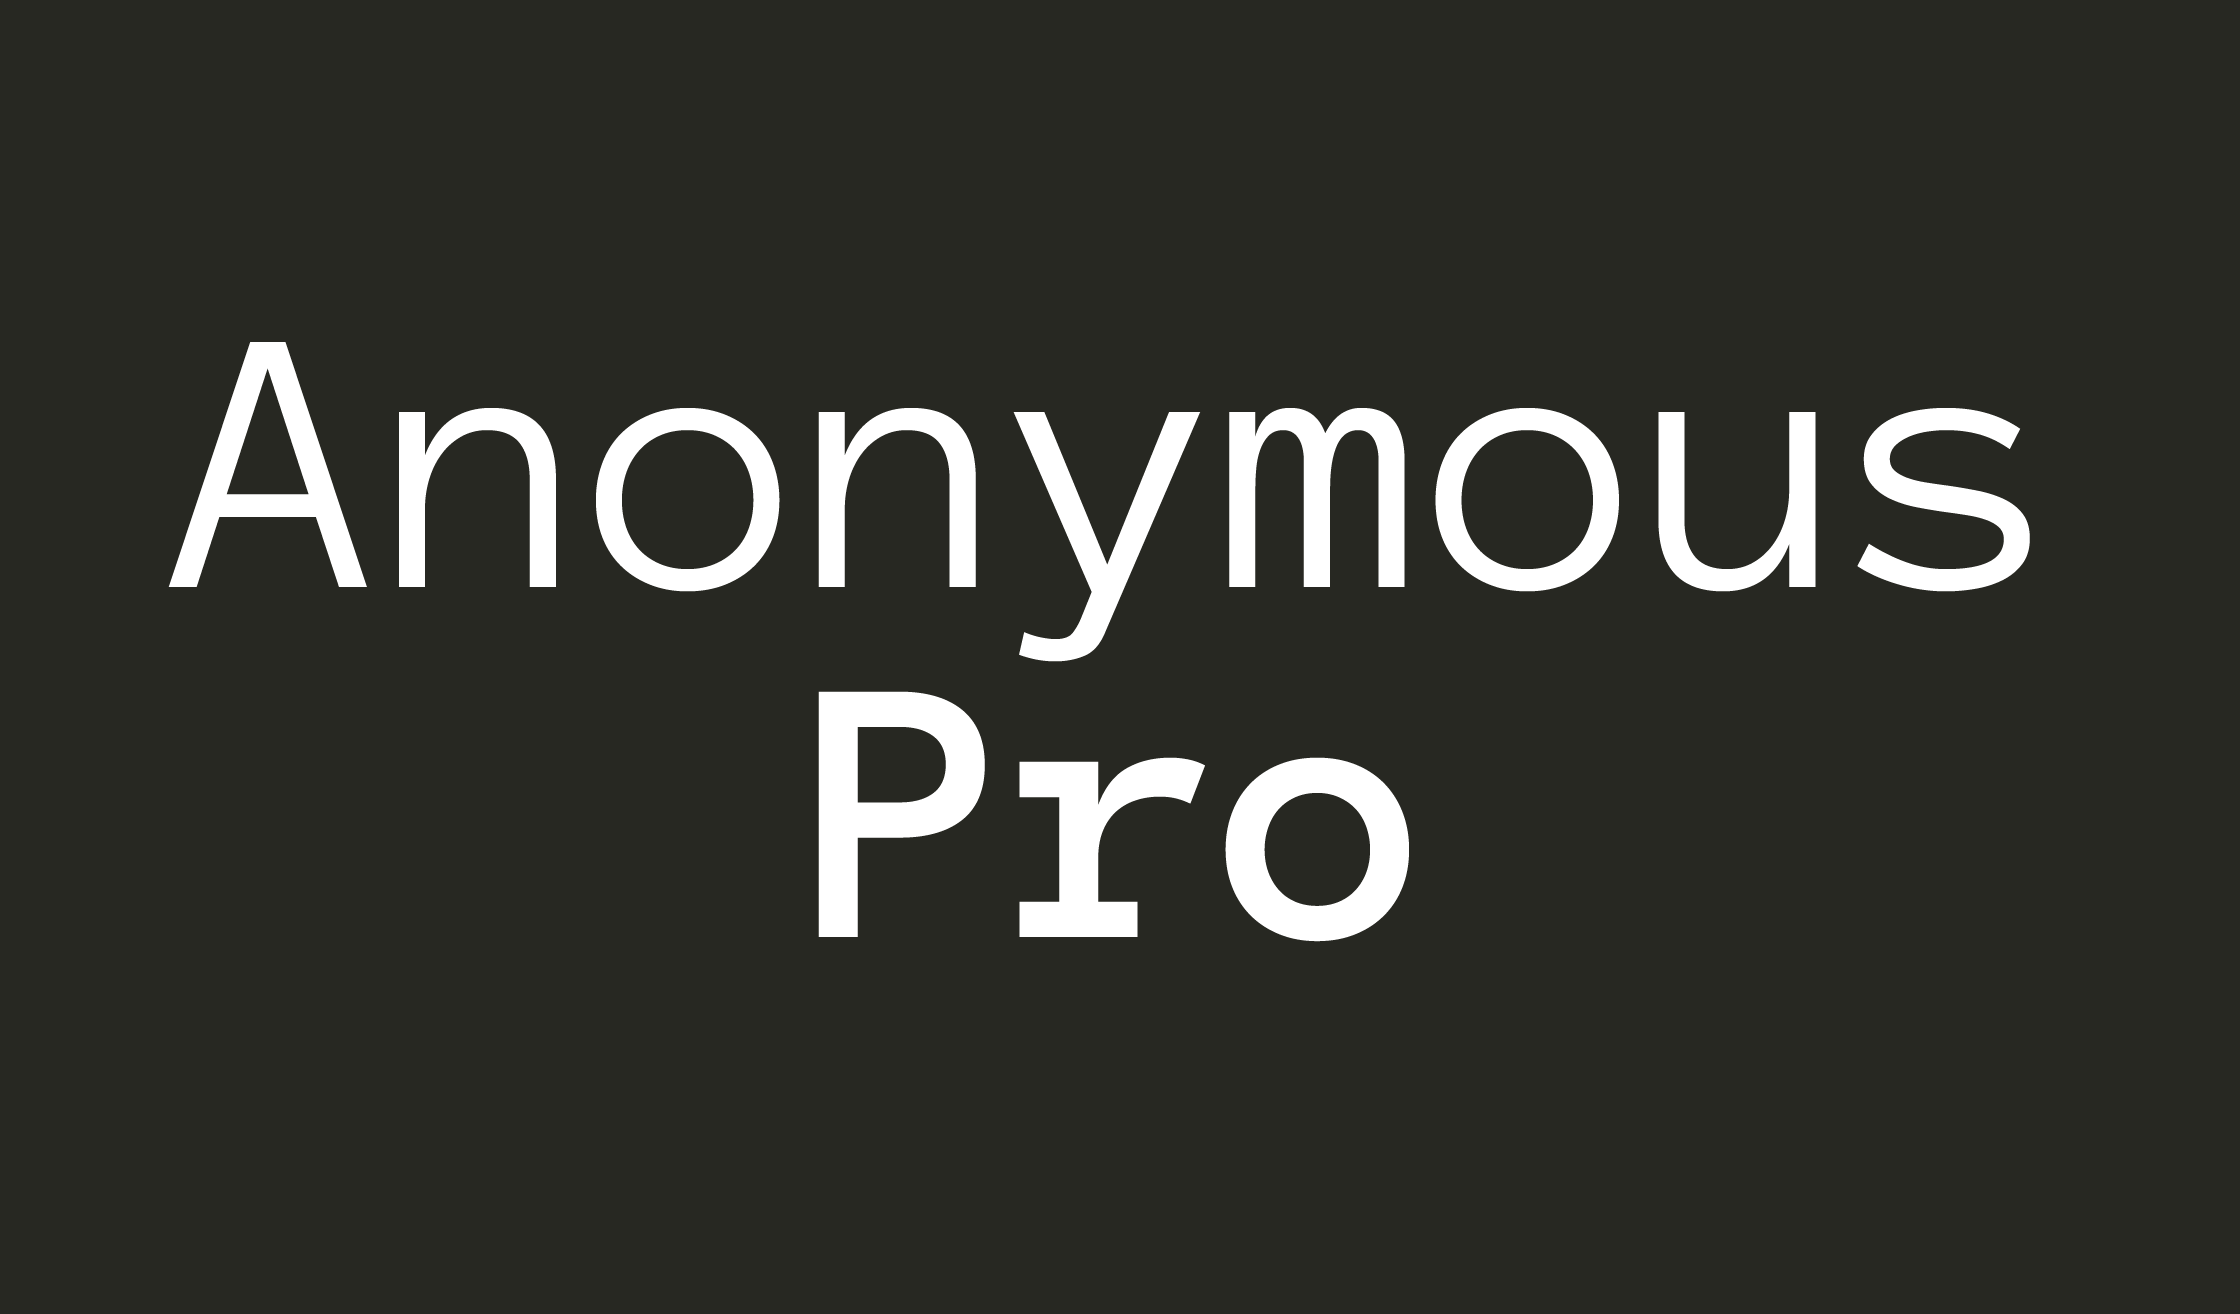 Police Anonymous Pro